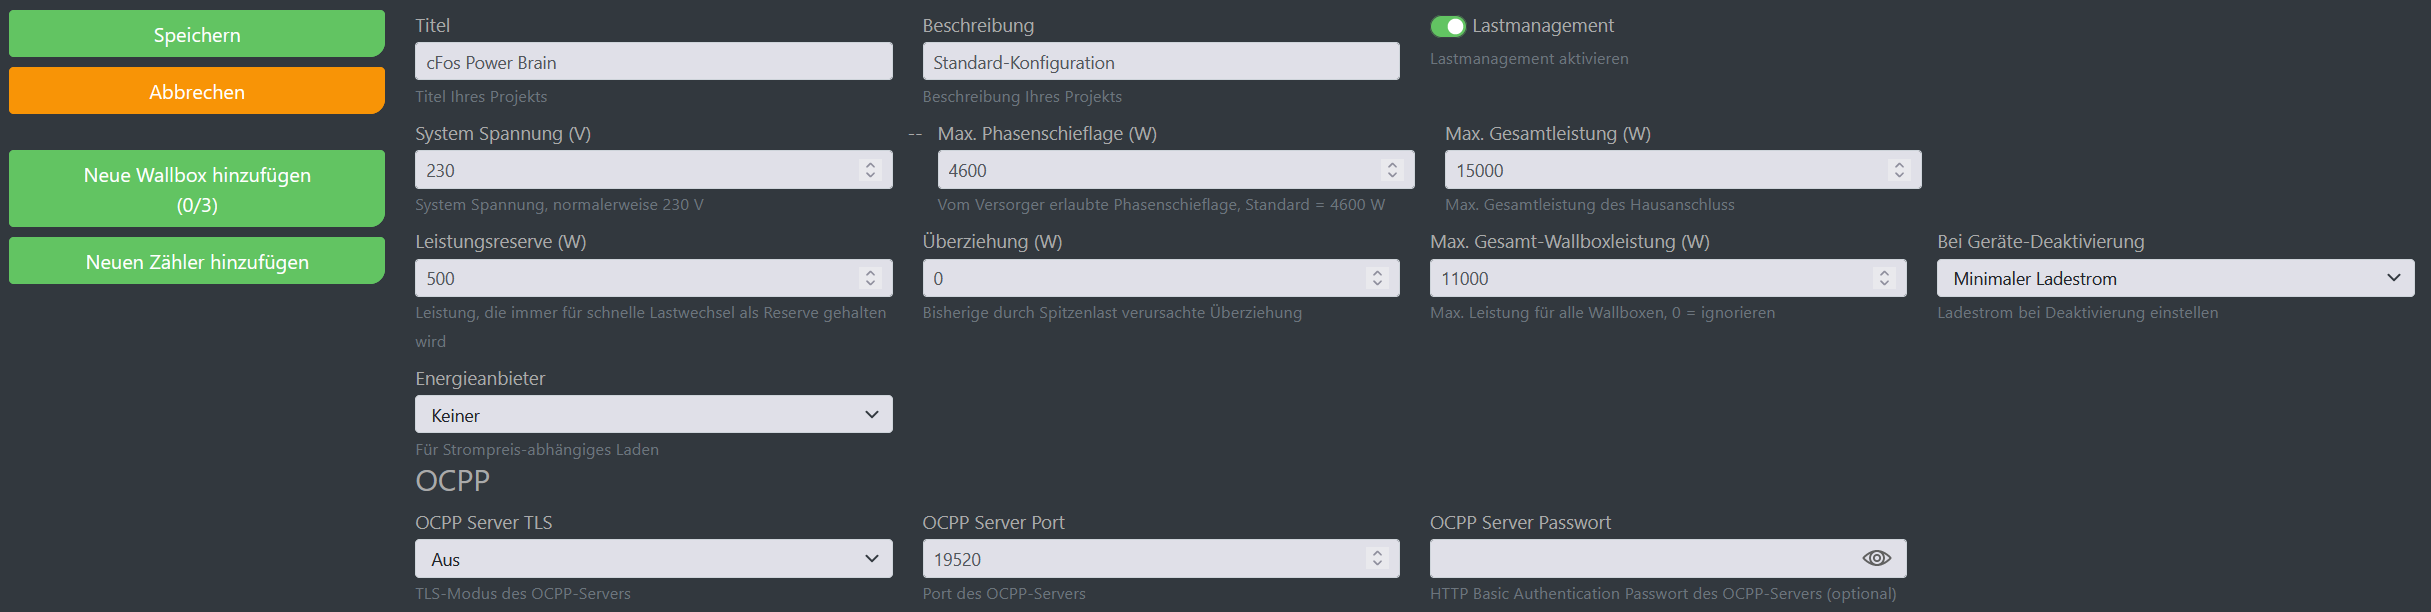 Img Skärmdump cFos Charging Manager-konfiguration